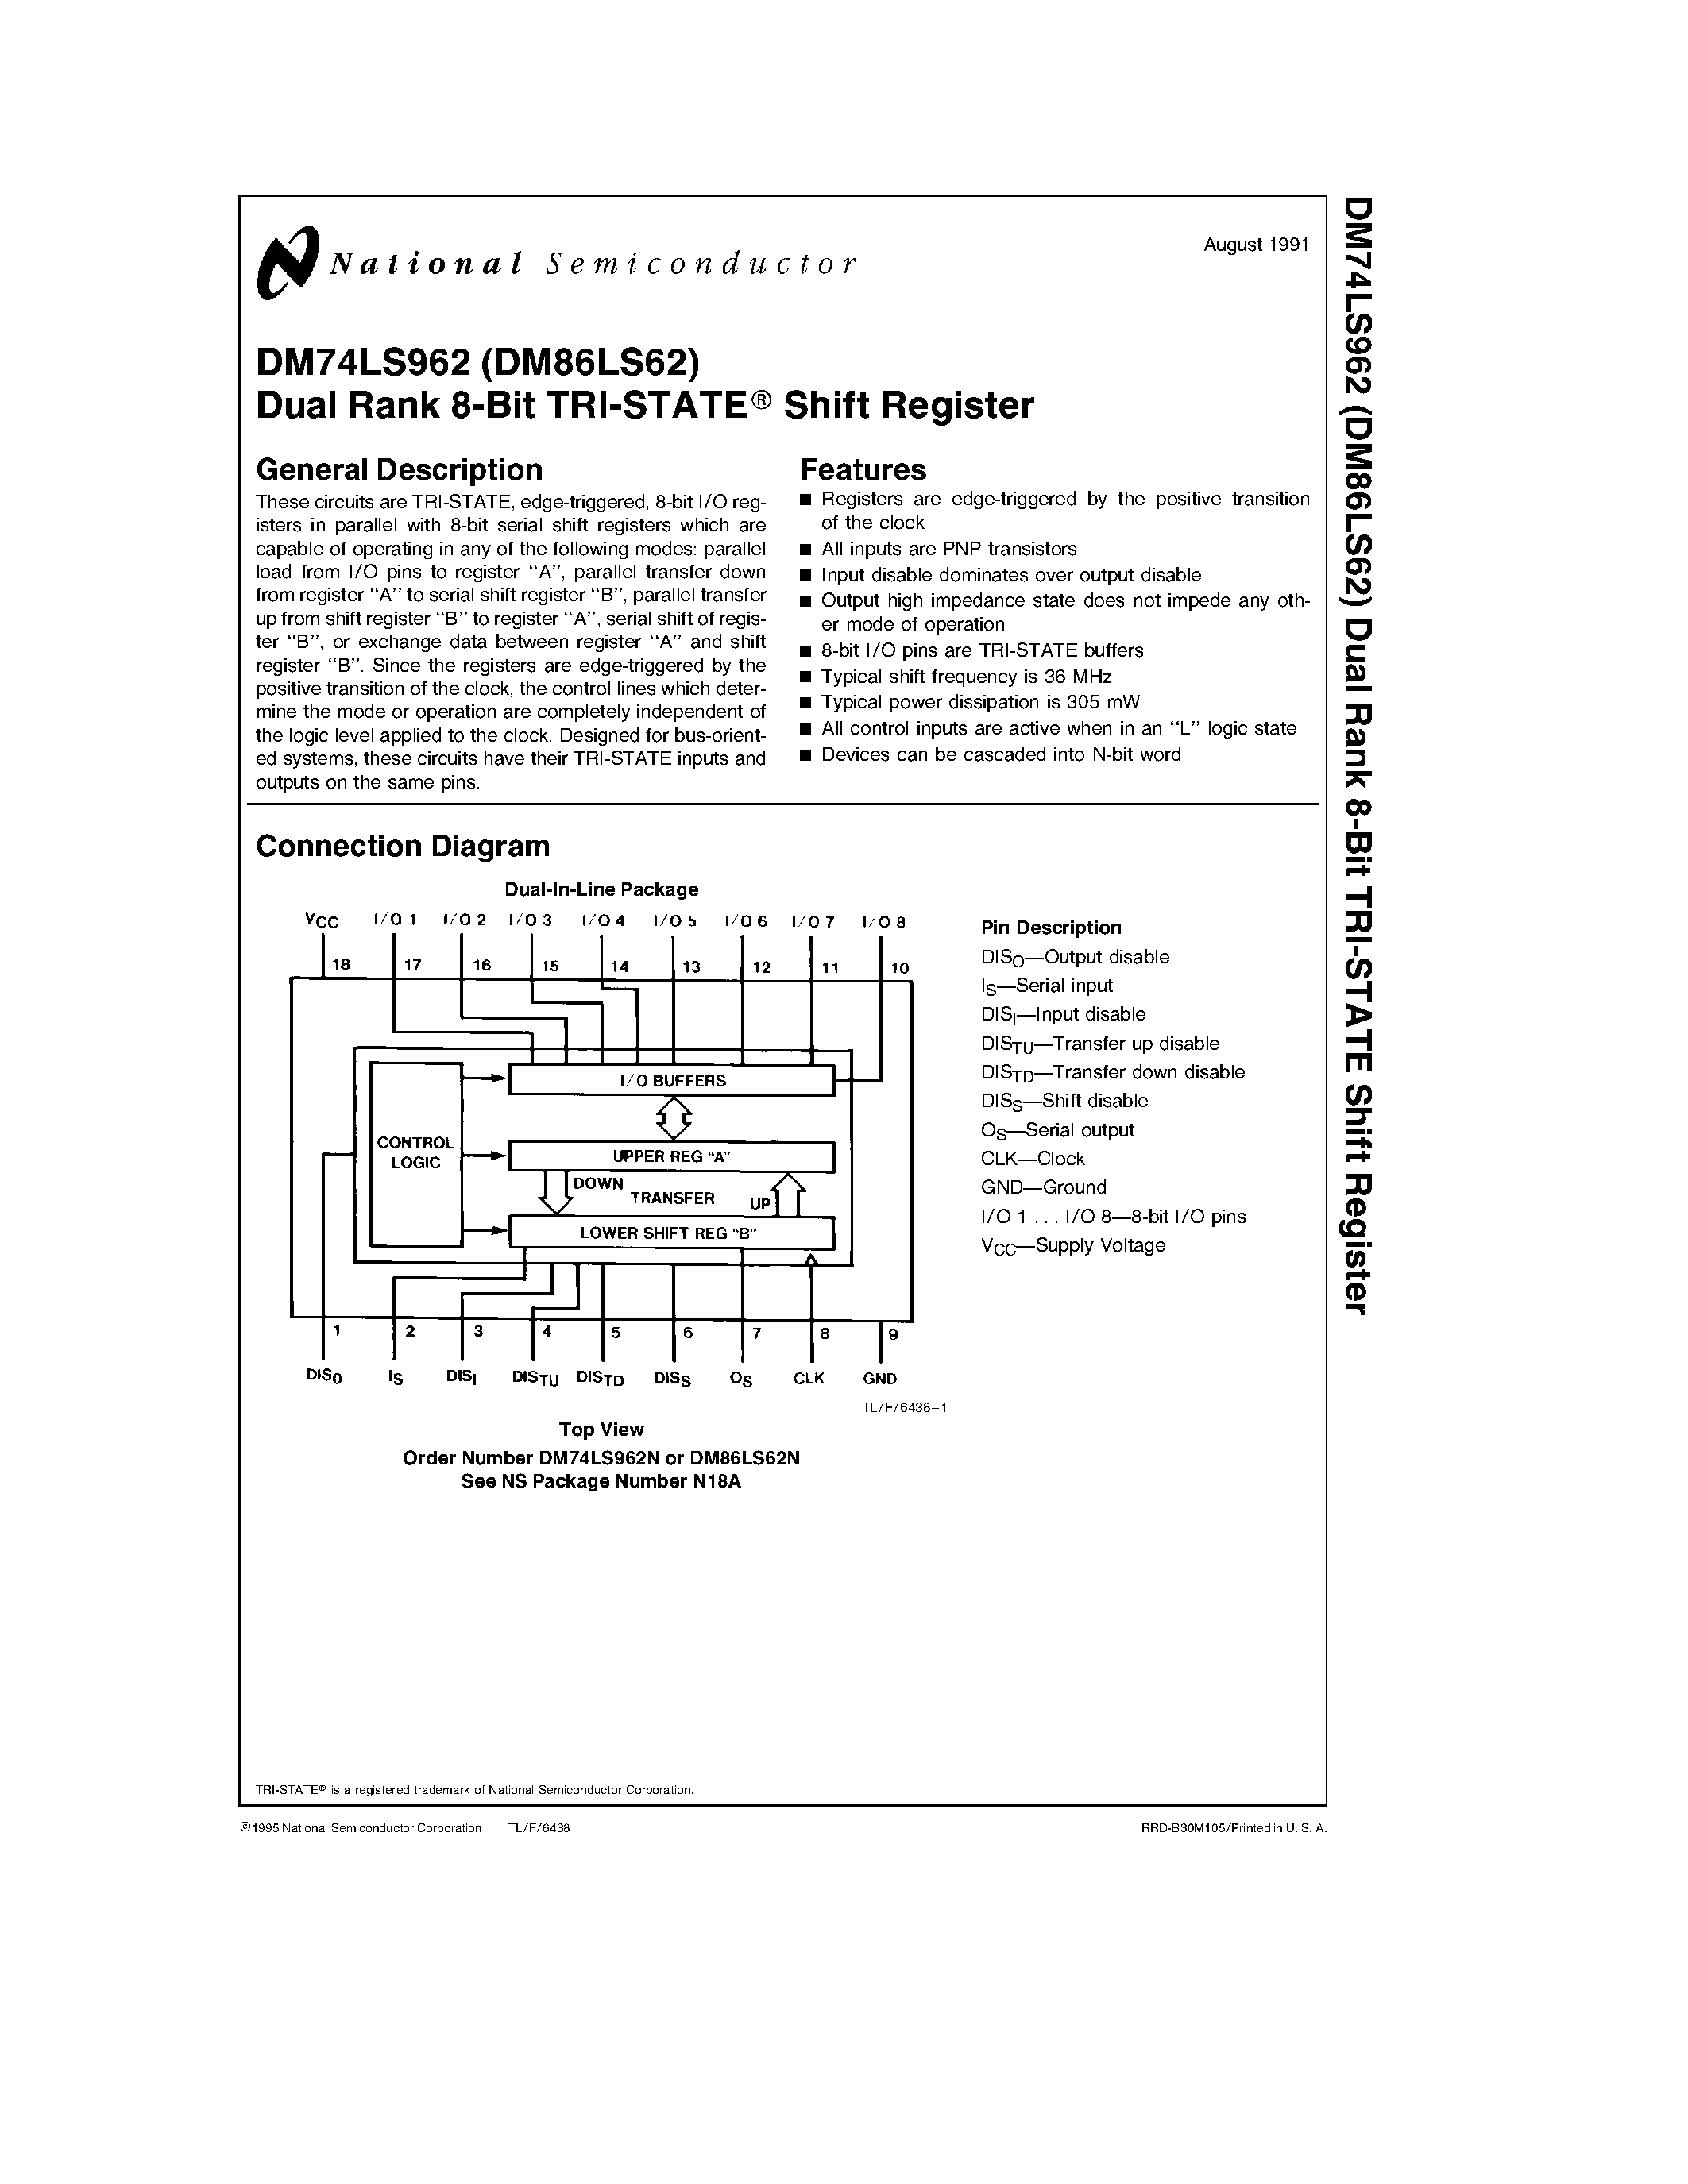 Datasheet DM74LS962 - Dual Rank 8-Bit TRI-STATE Shift Register page 1